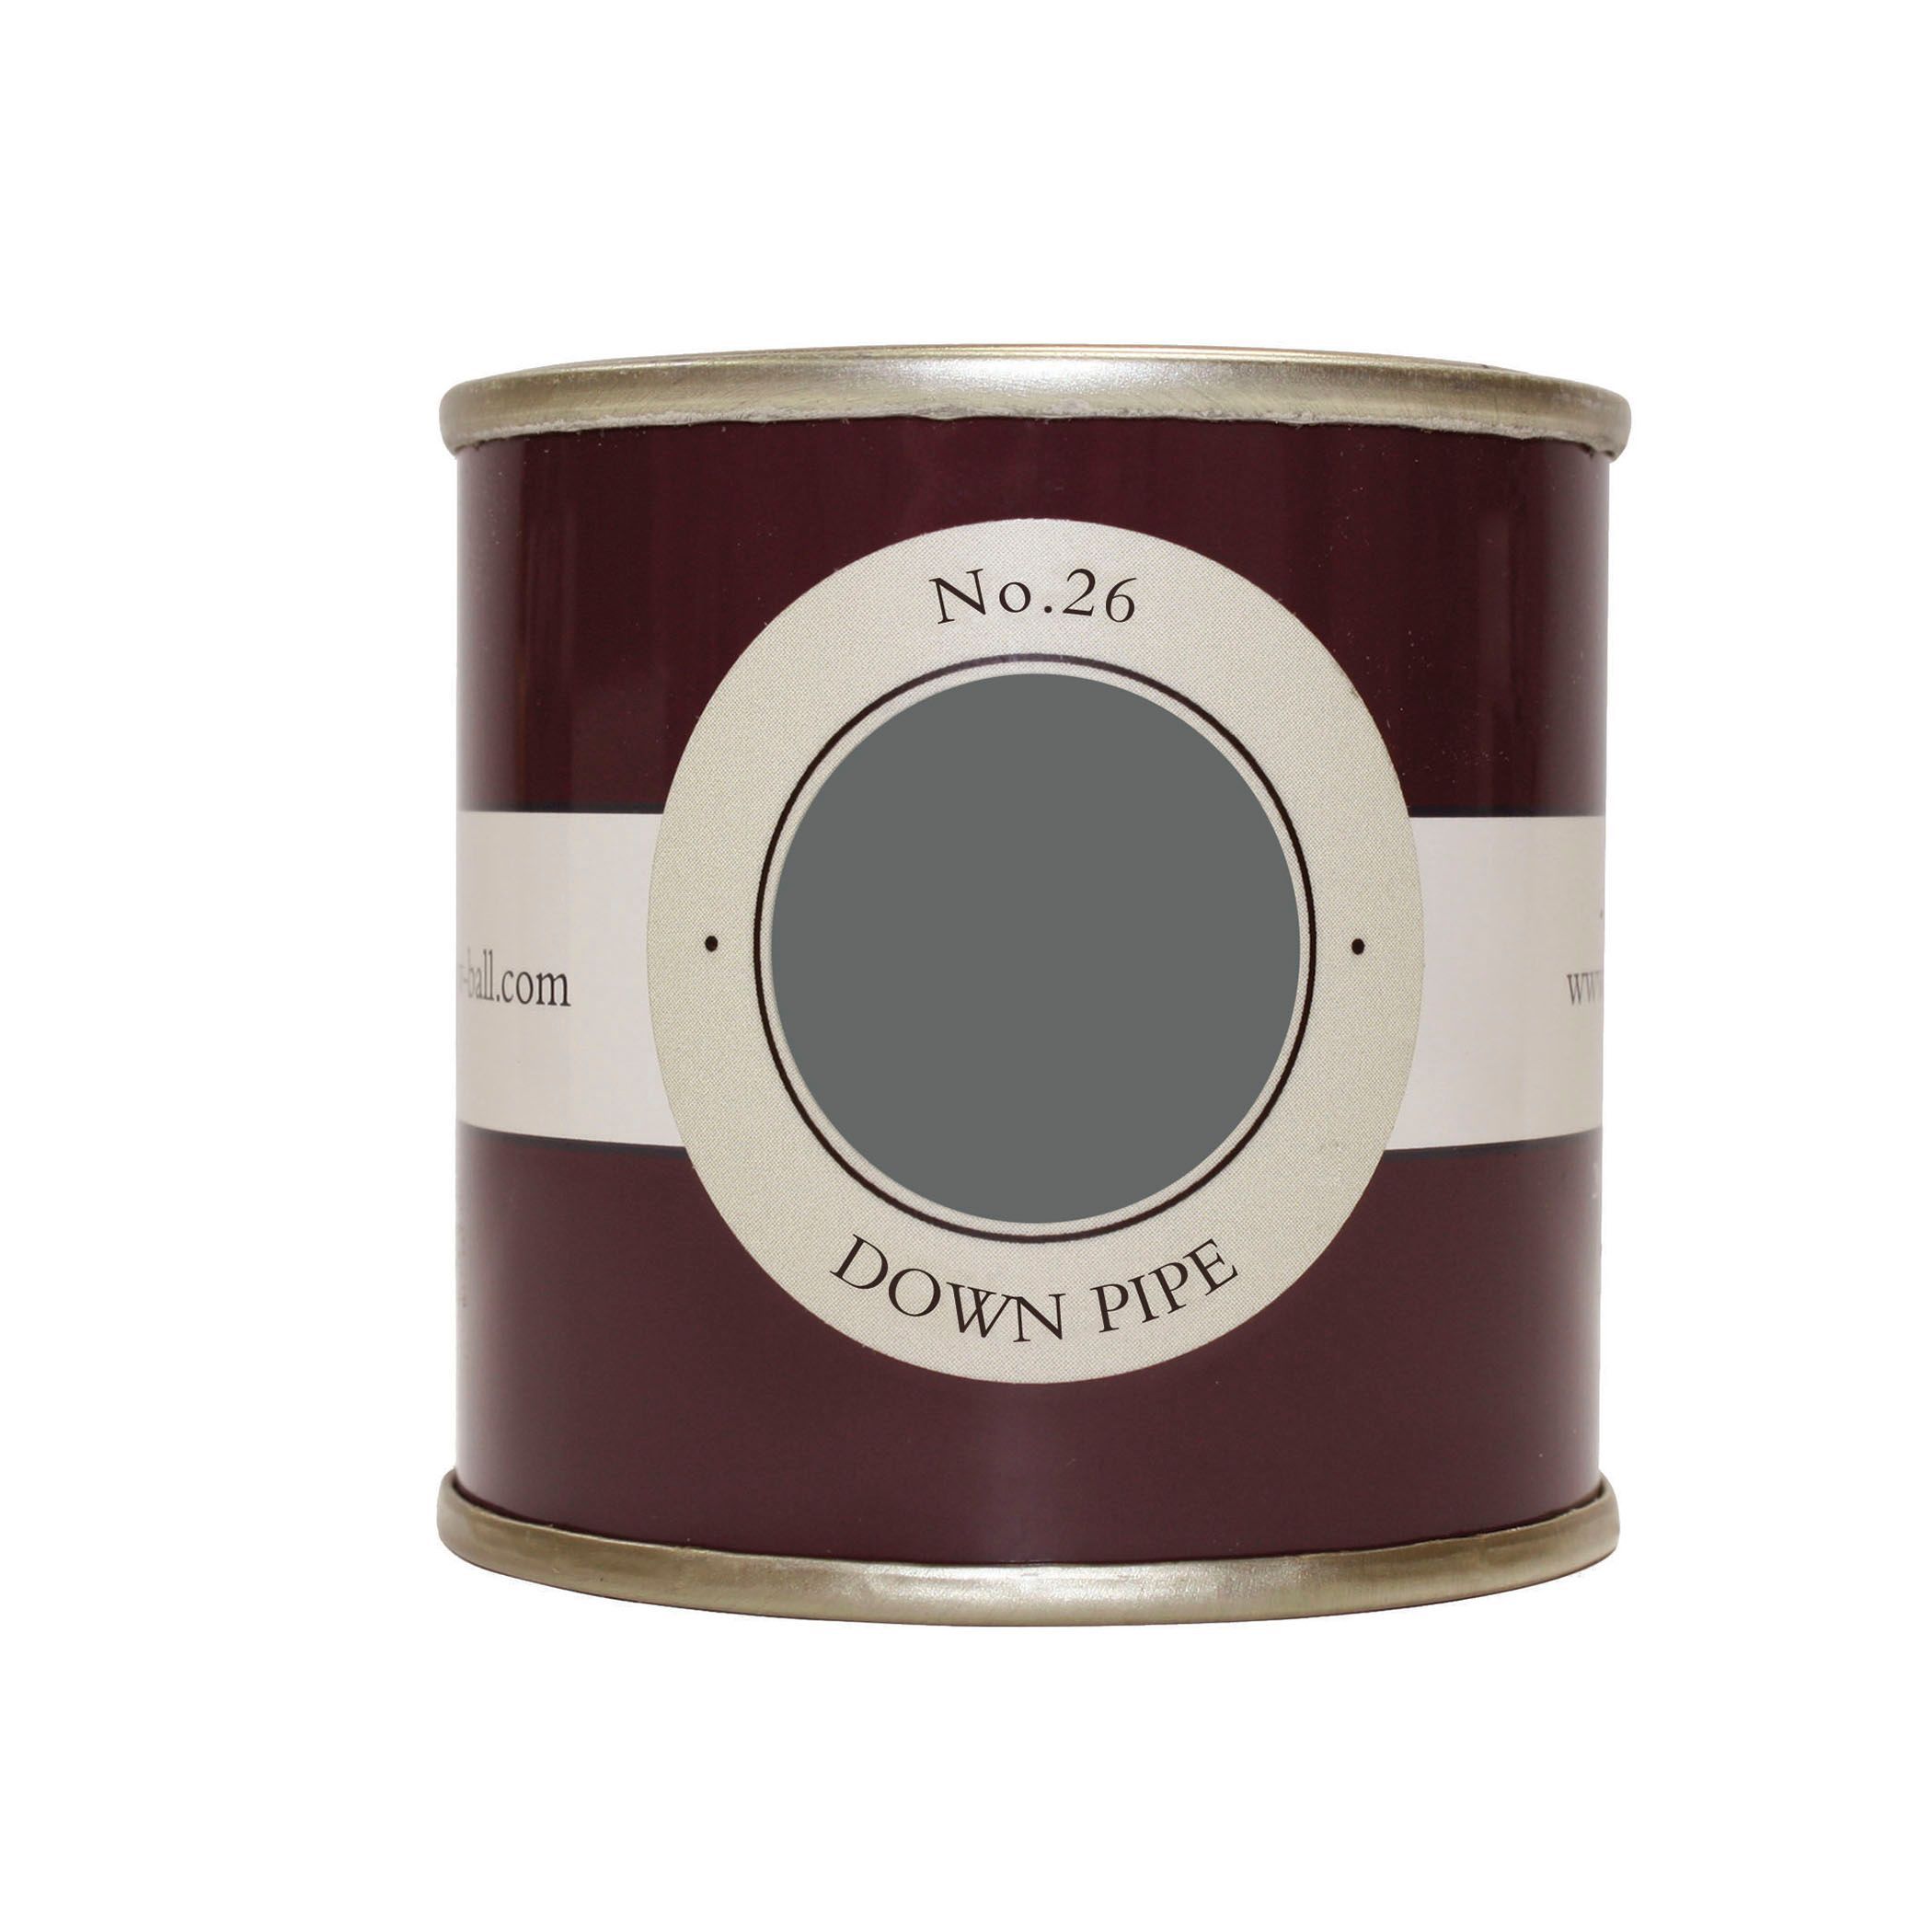 Farrow & Ball Estate Down pipe No.26 Emulsion paint, 100ml Tester pot